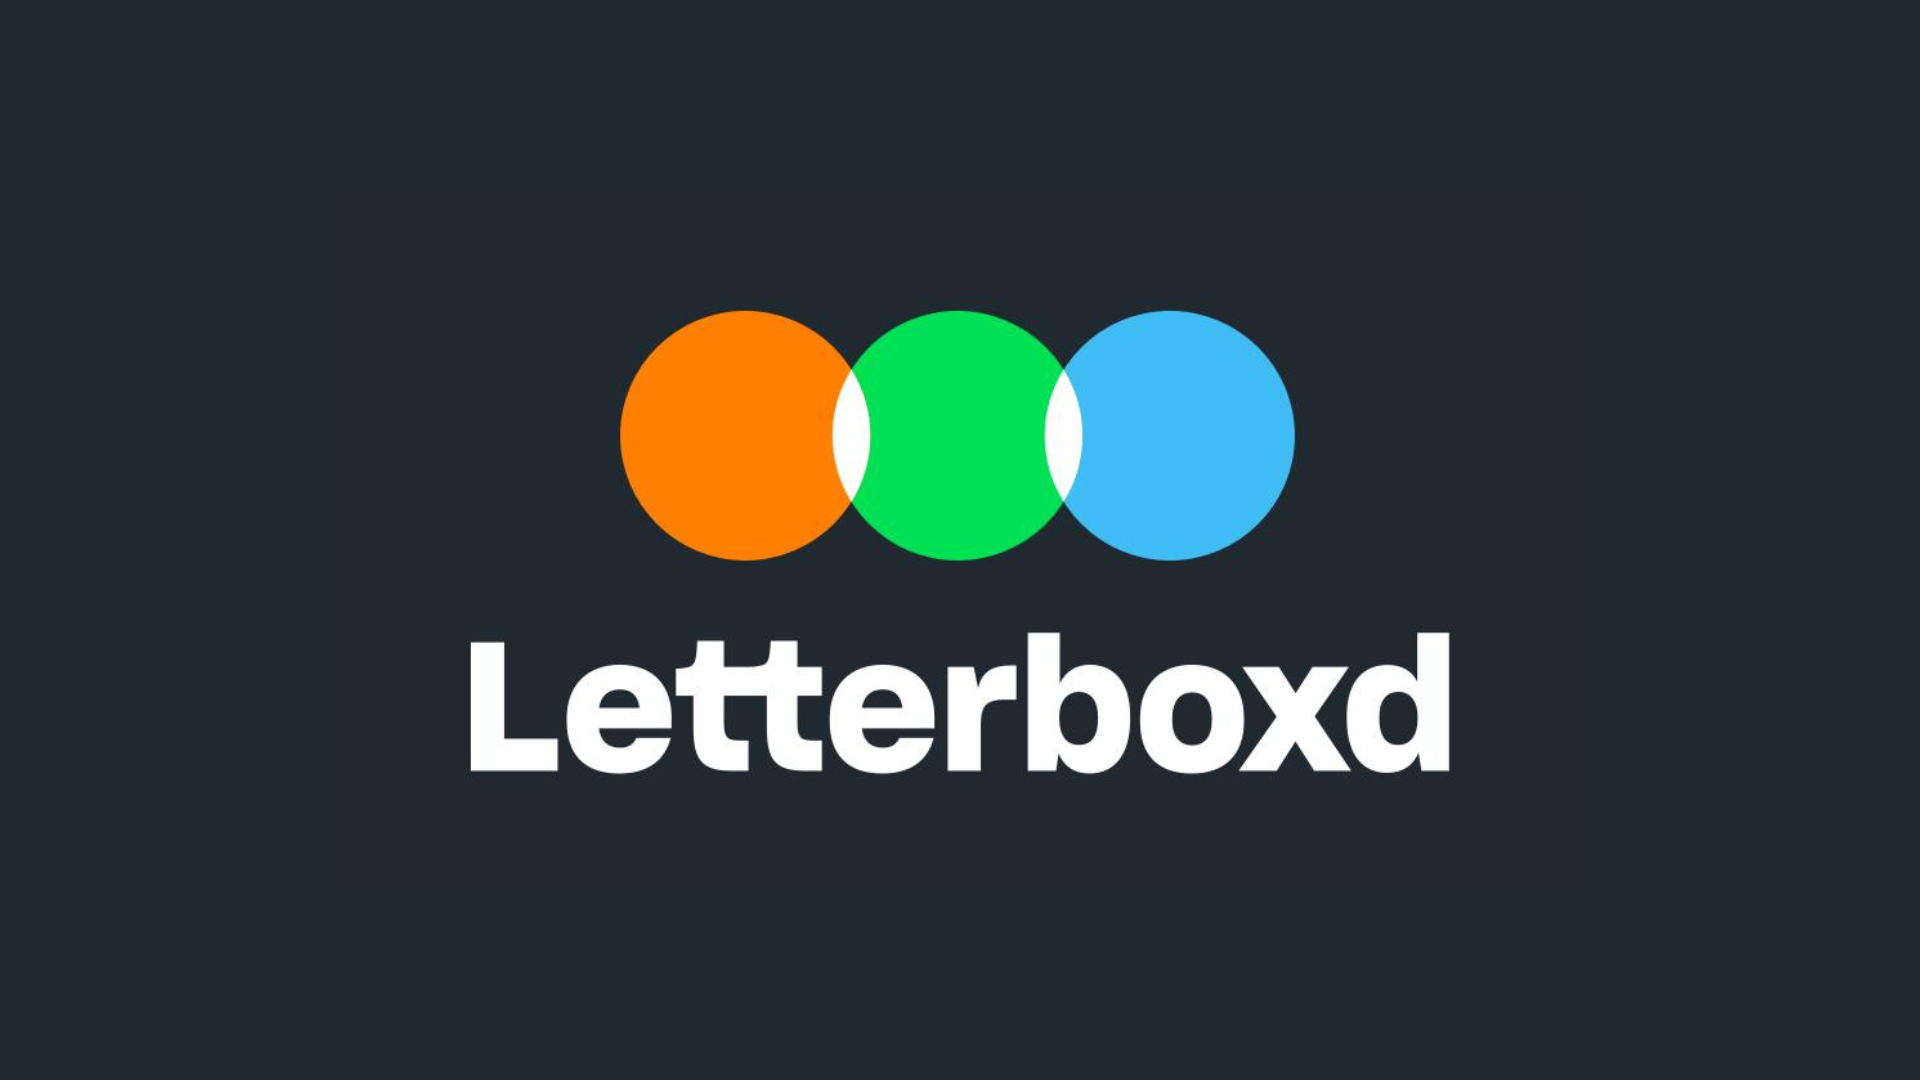 Letterboxd logo.